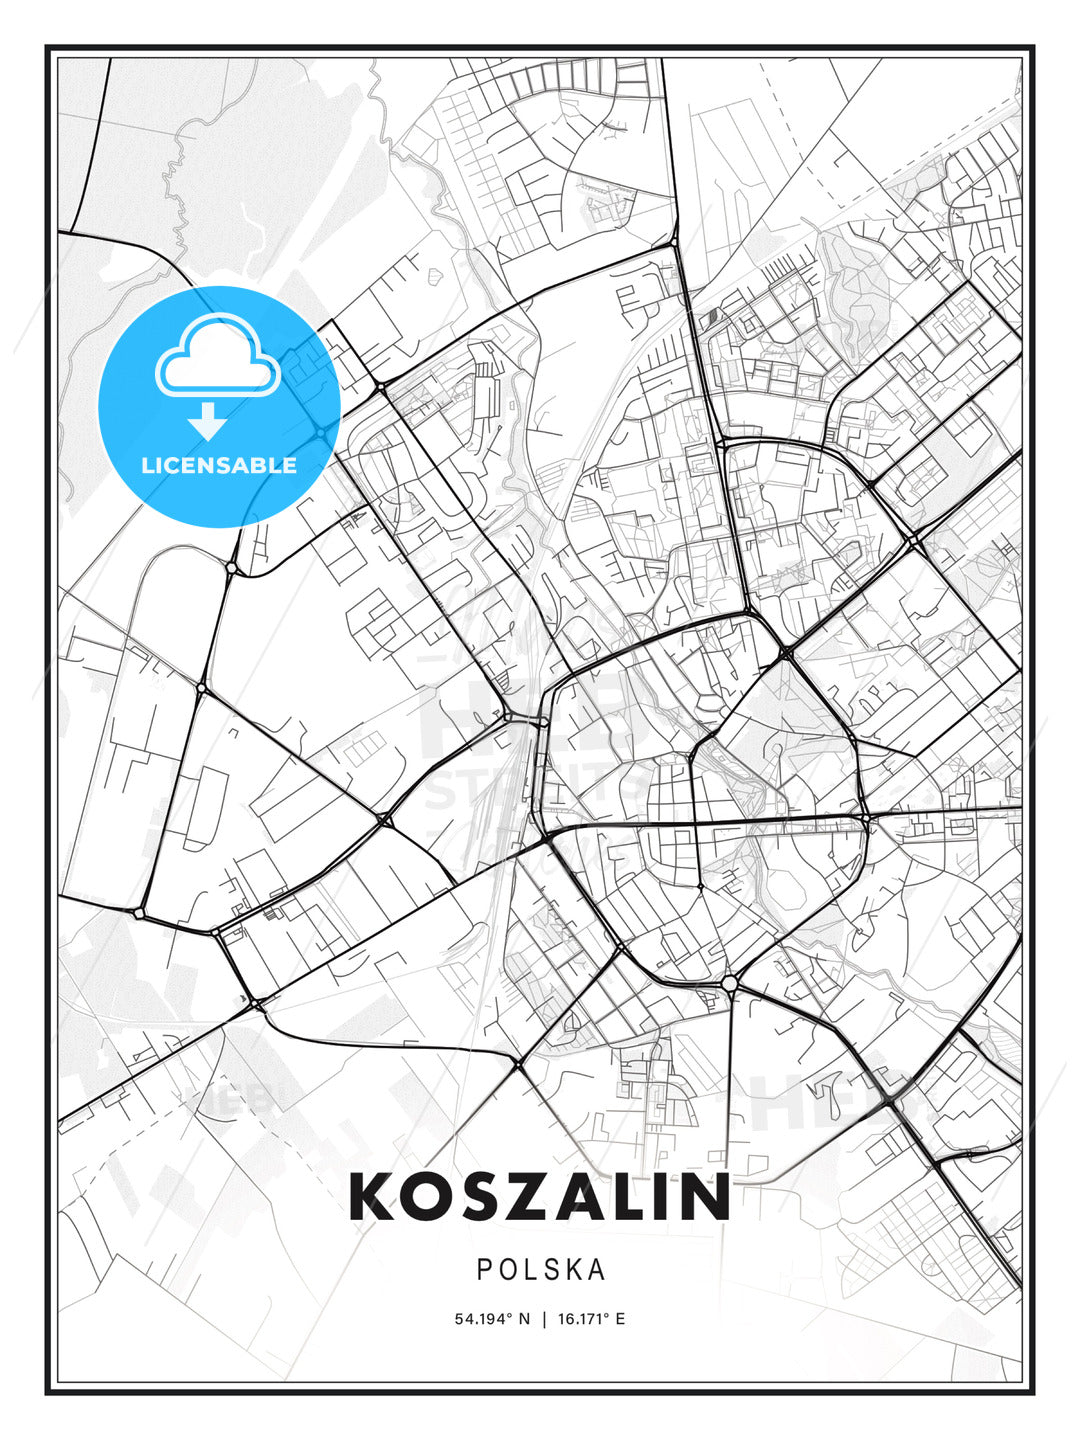 Koszalin, Poland, Modern Print Template in Various Formats - HEBSTREITS Sketches